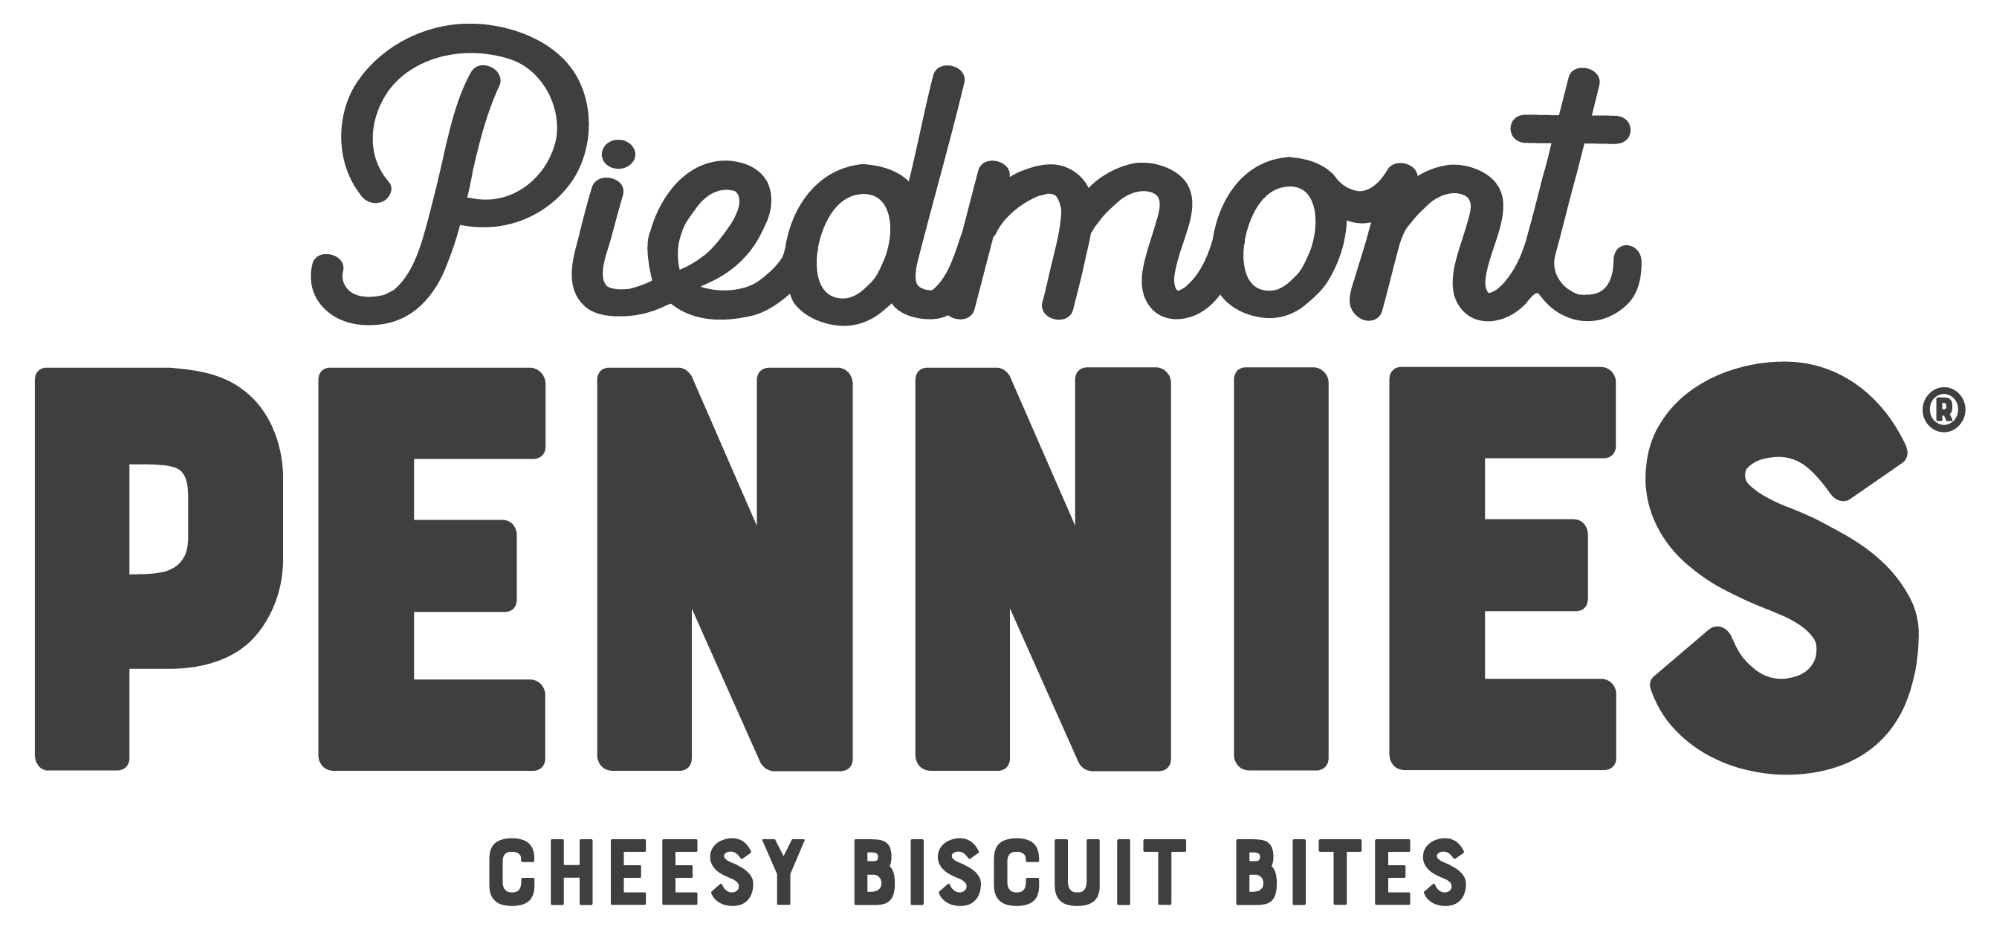 Piedmont Pennies Cheesy Biscuit Bites Logo 